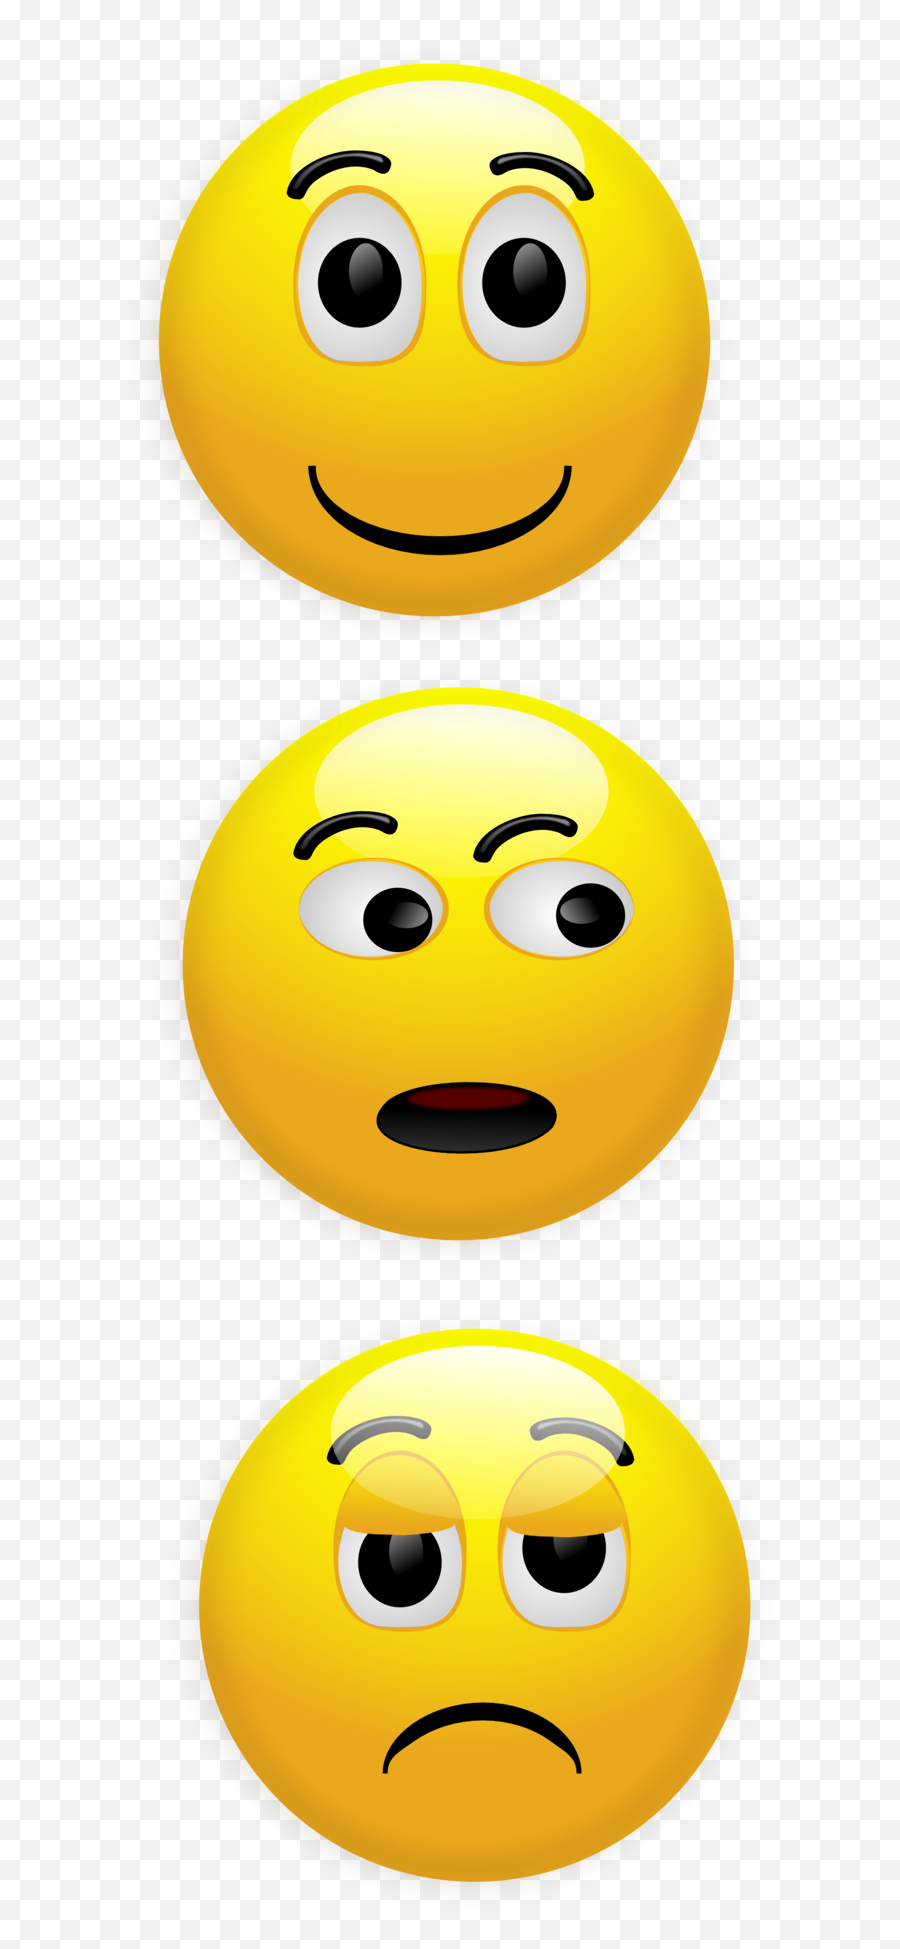 Unhappy Public Domain Image Search - Freeimg Emoji,Adult Emoticon Graphics